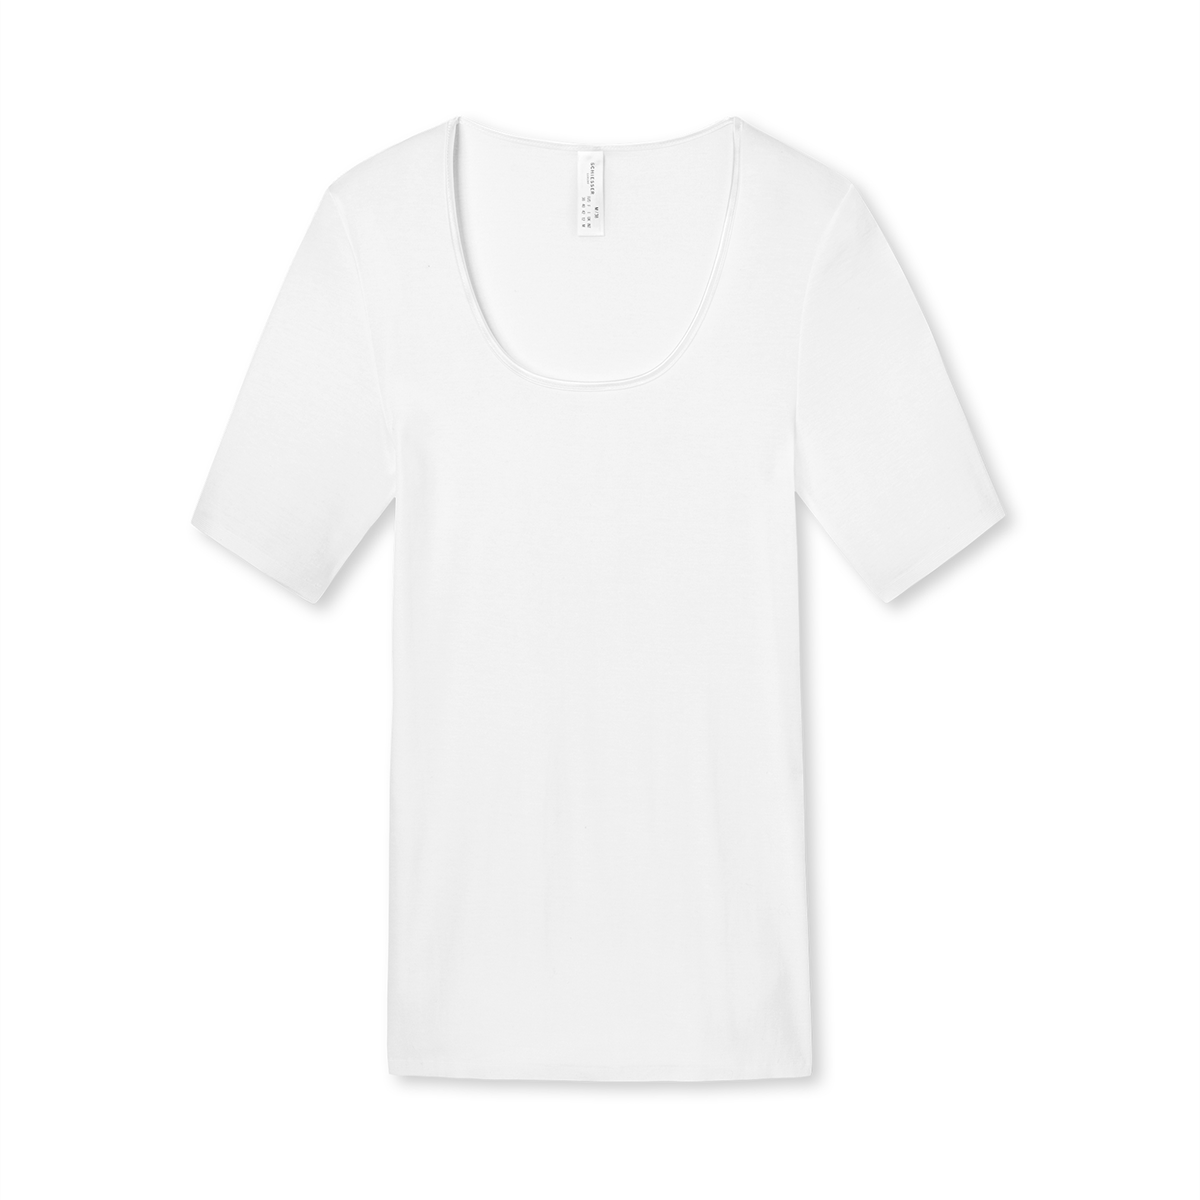 Se Schiesser T-shirt, Farve: Hvid, Størrelse: 36, Dame hos Netlingeri.dk